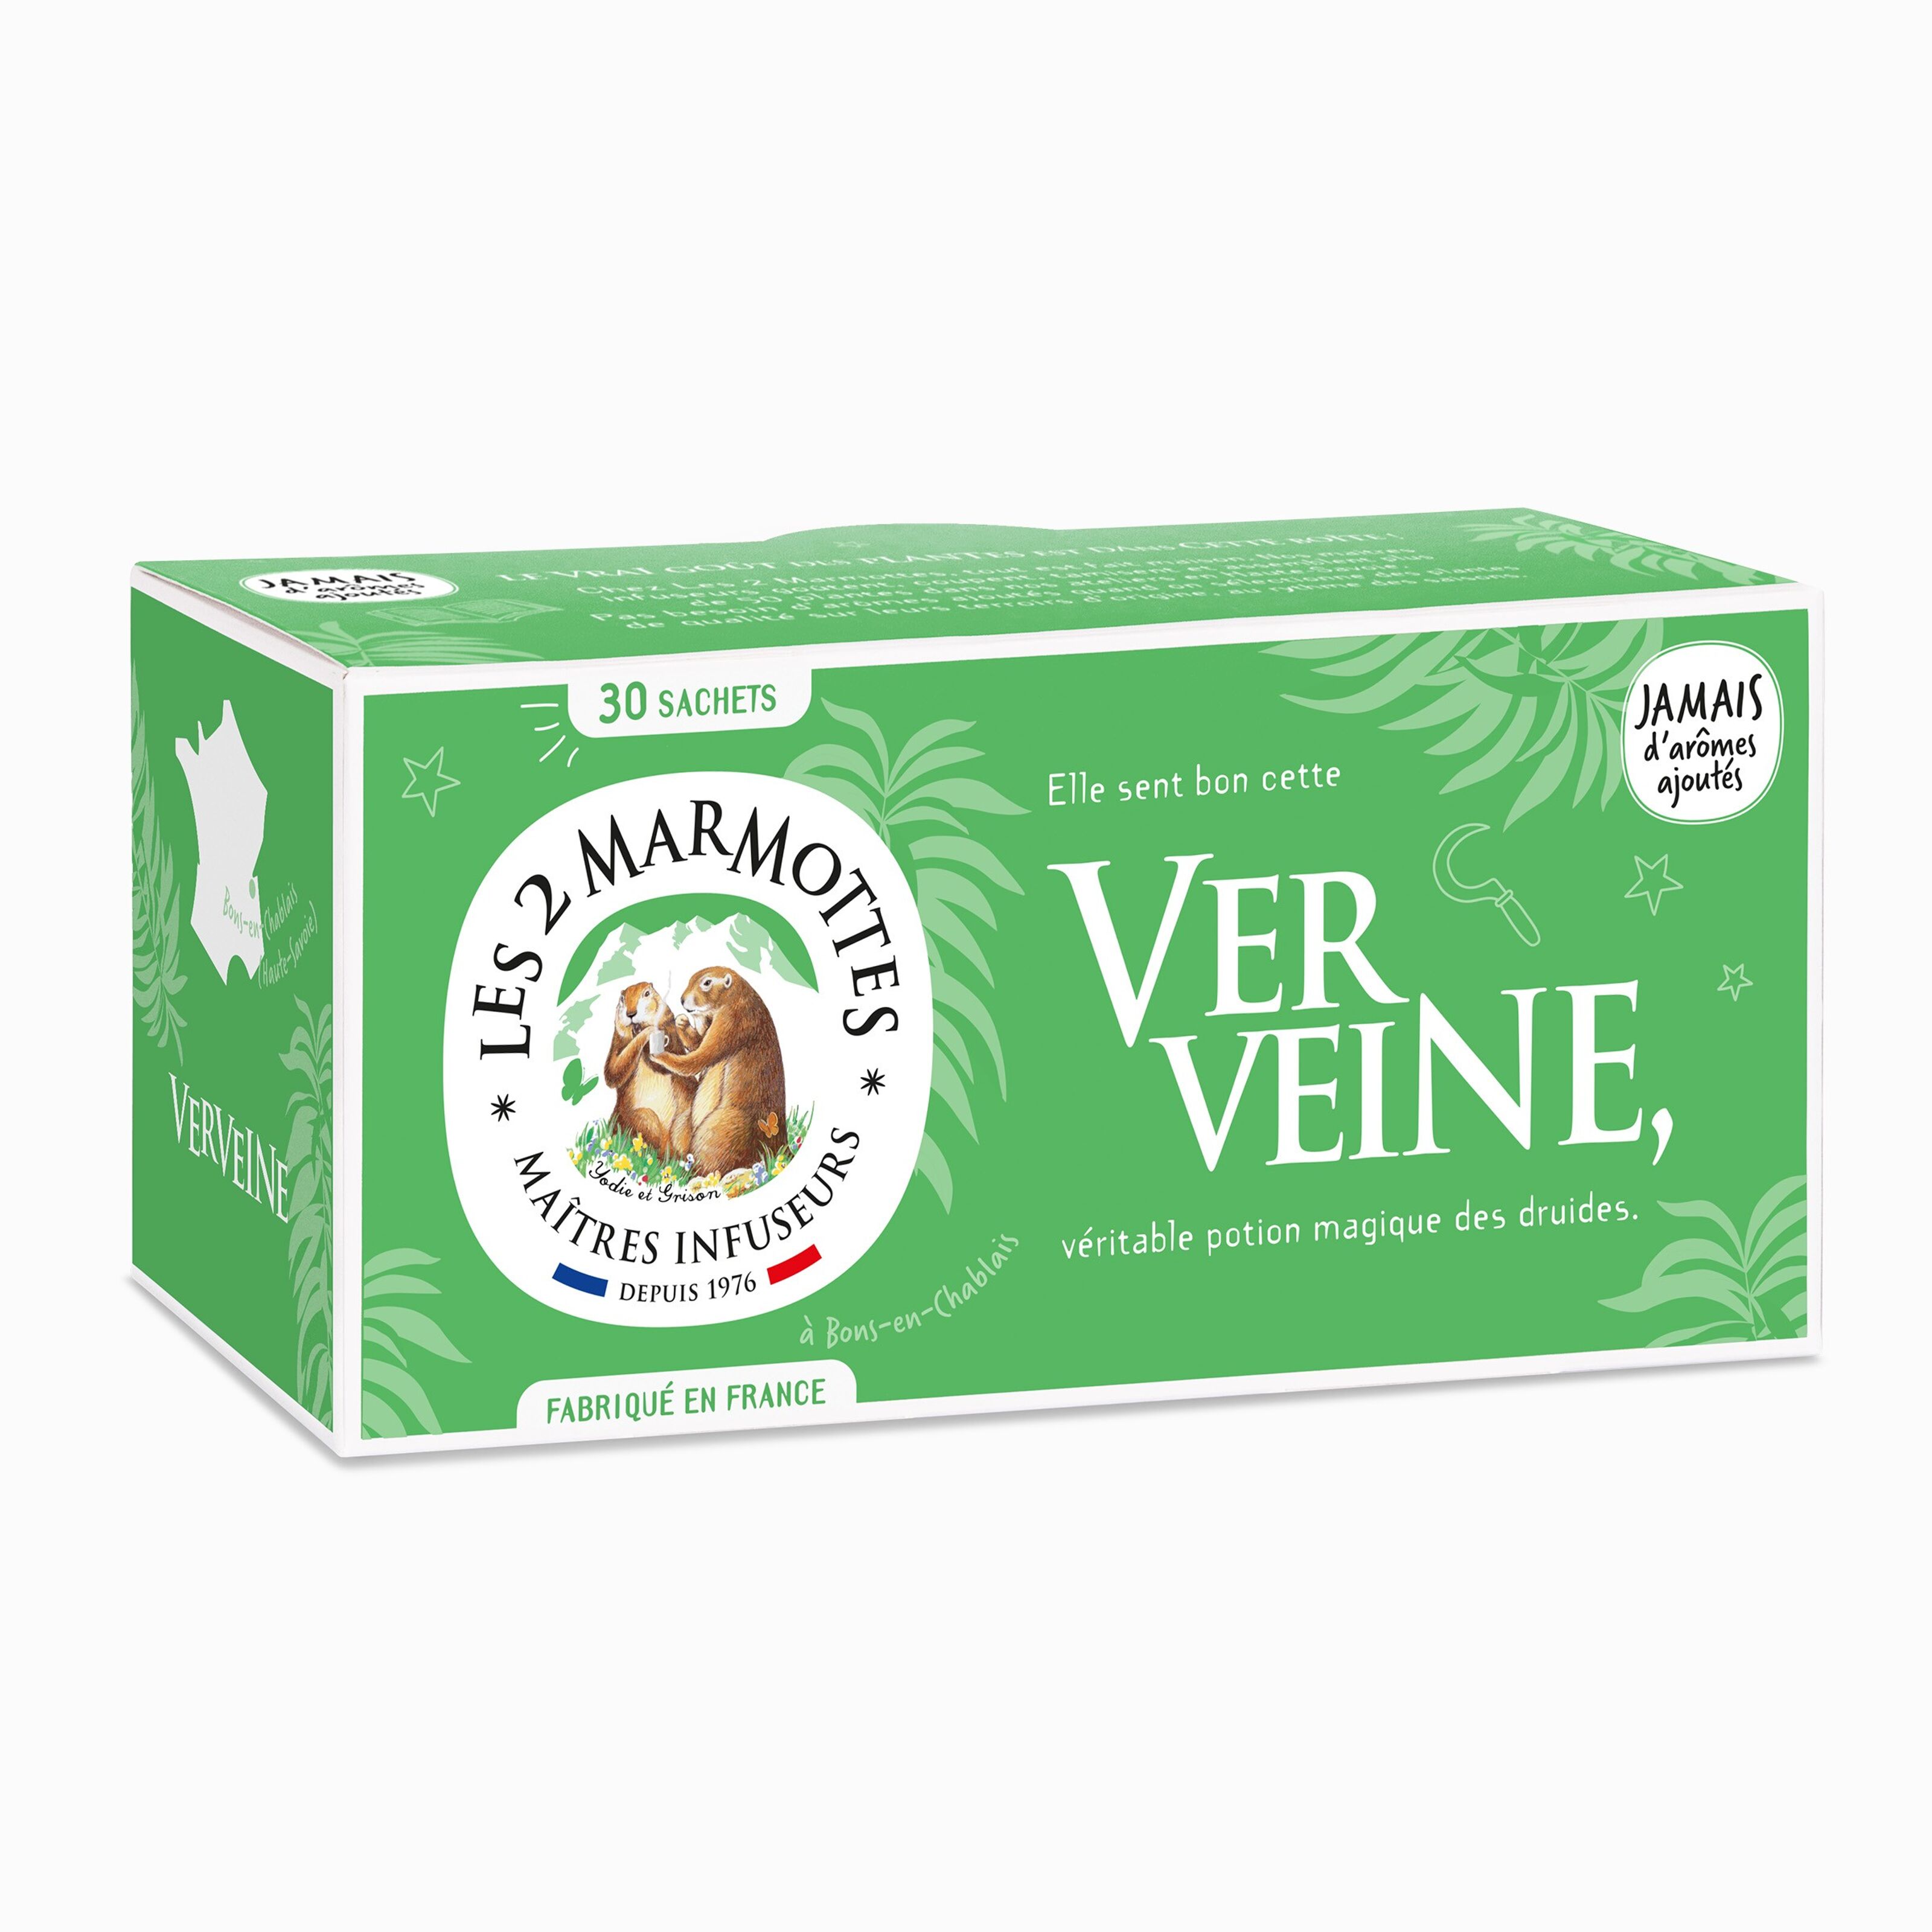 Buy wholesale Organic verbena infusion - Organic herbal teas and